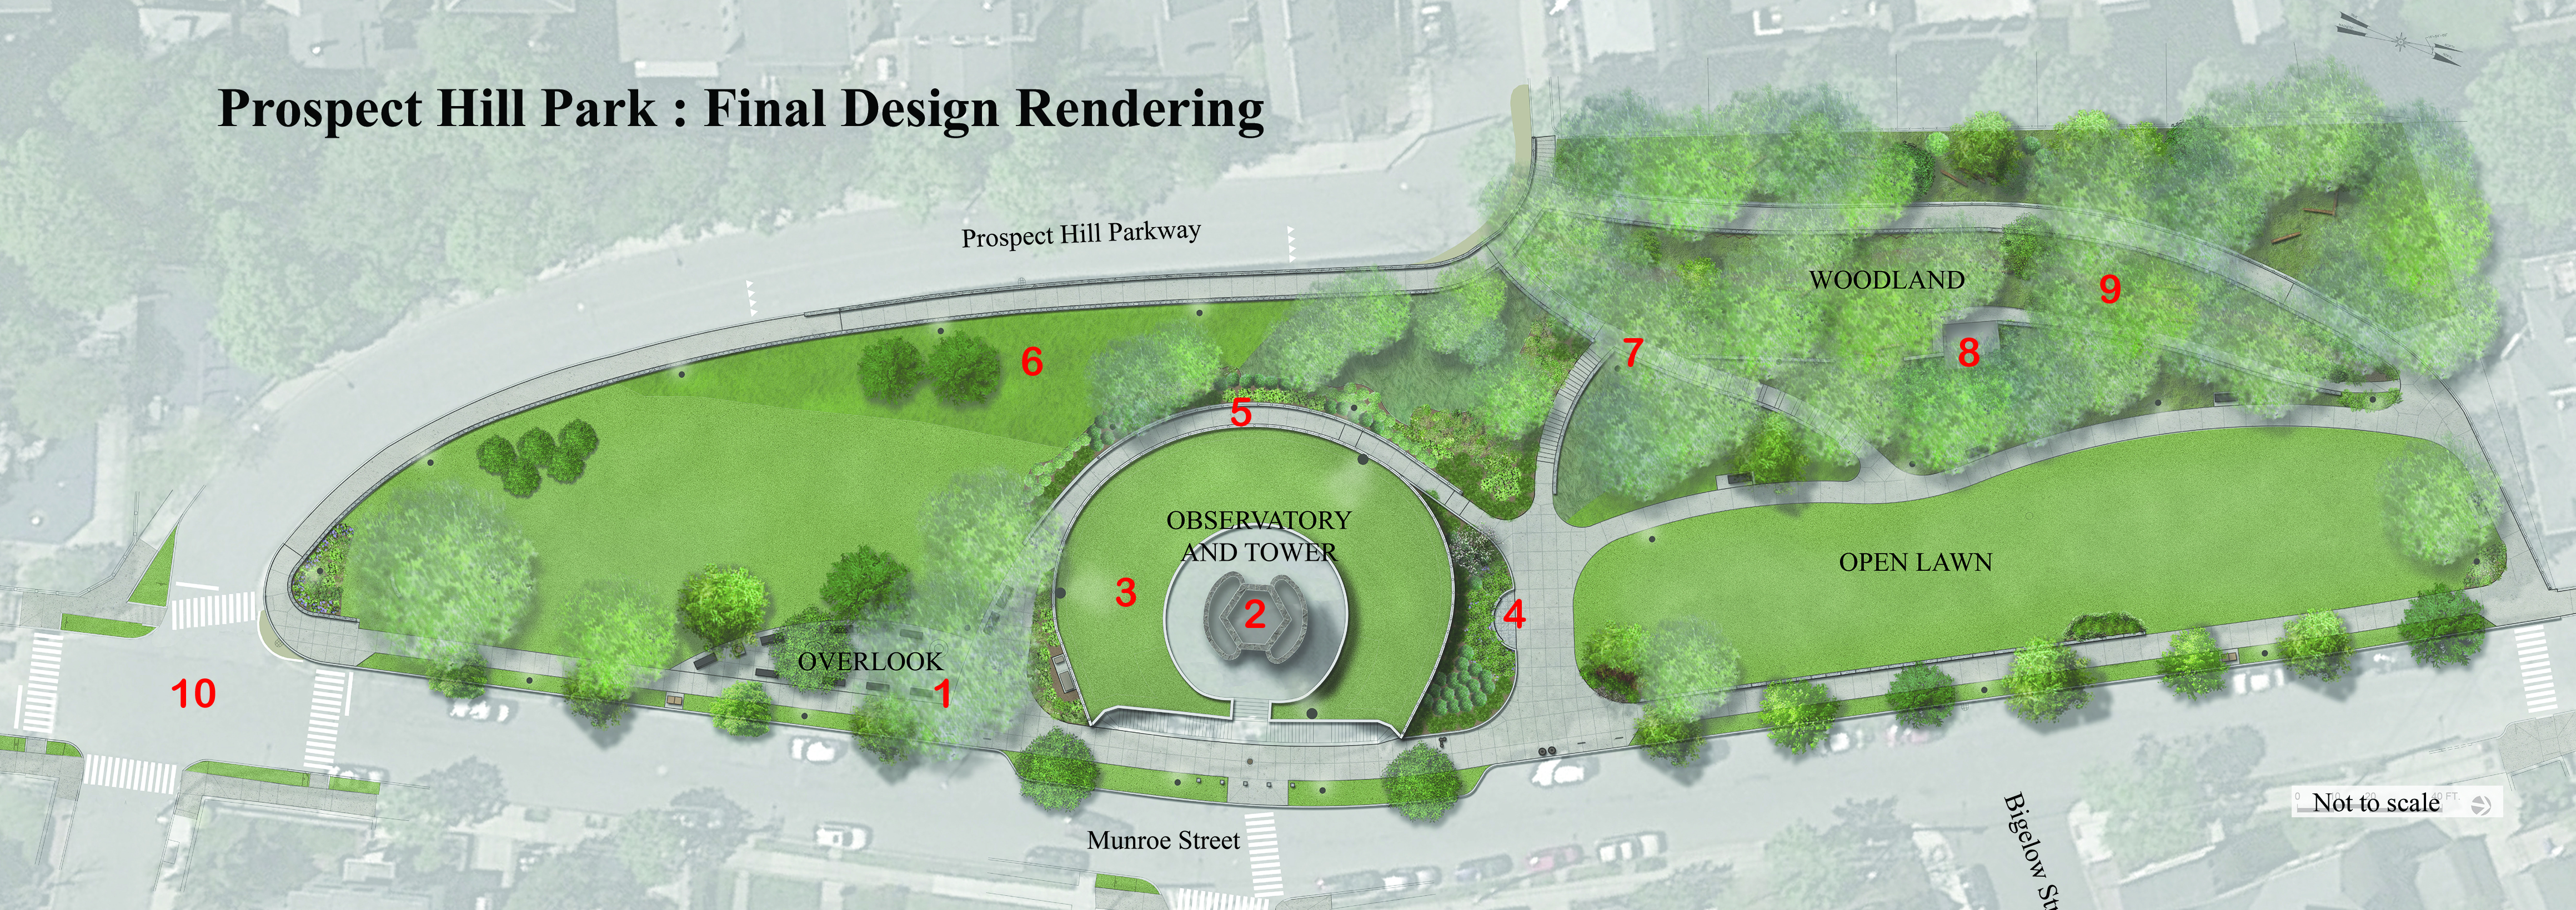 Prospect Hill Park design rendering